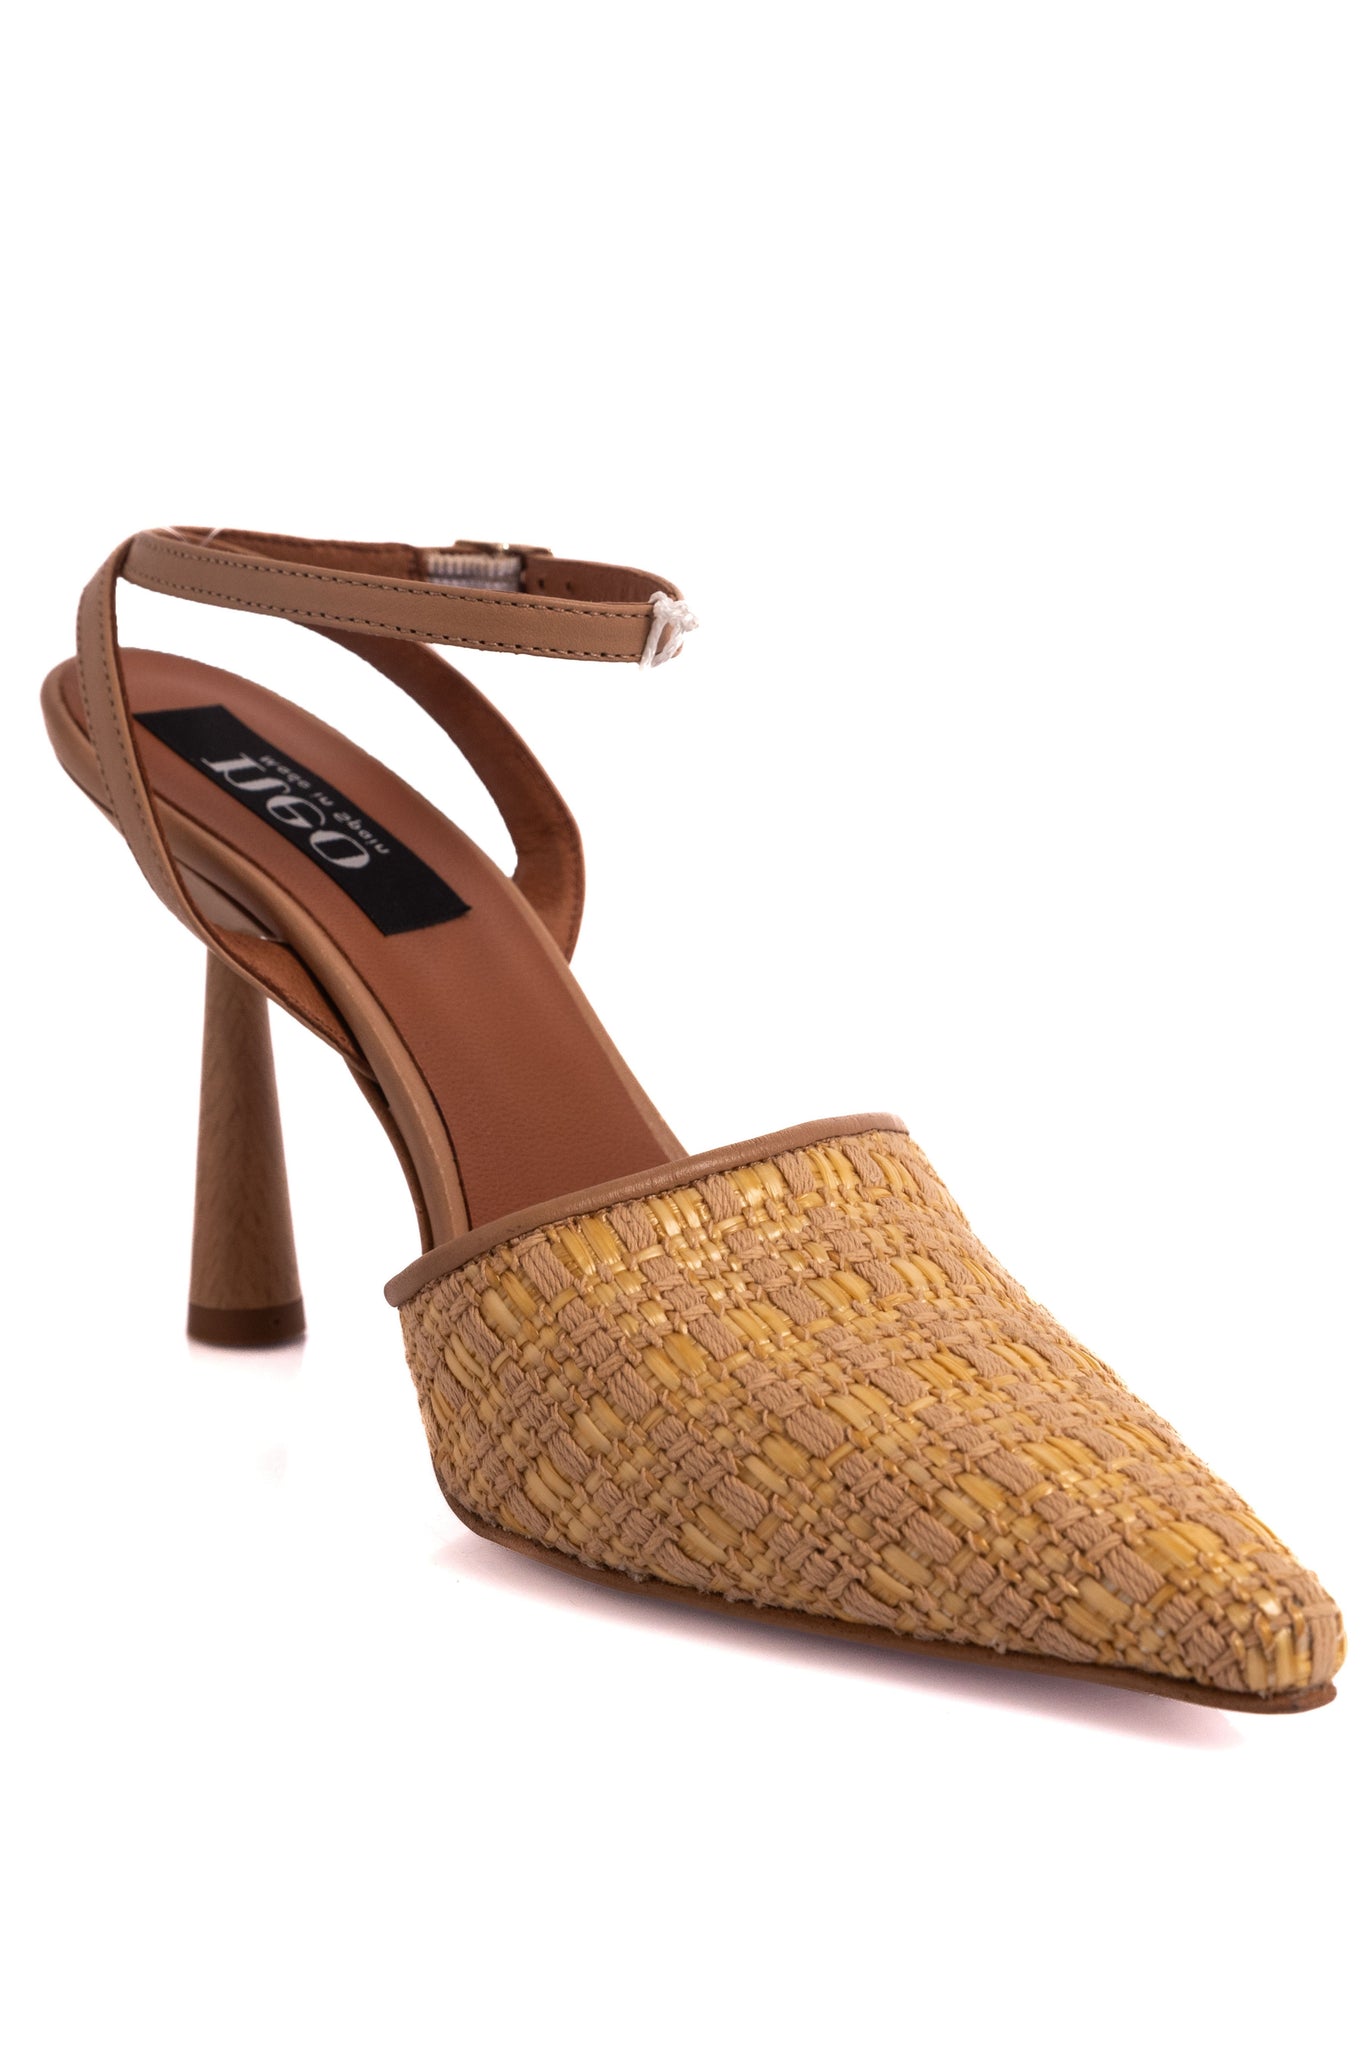 sam edelman women's yumi peep toe natural suede w/ bow Pumps heels size 9.5  | eBay